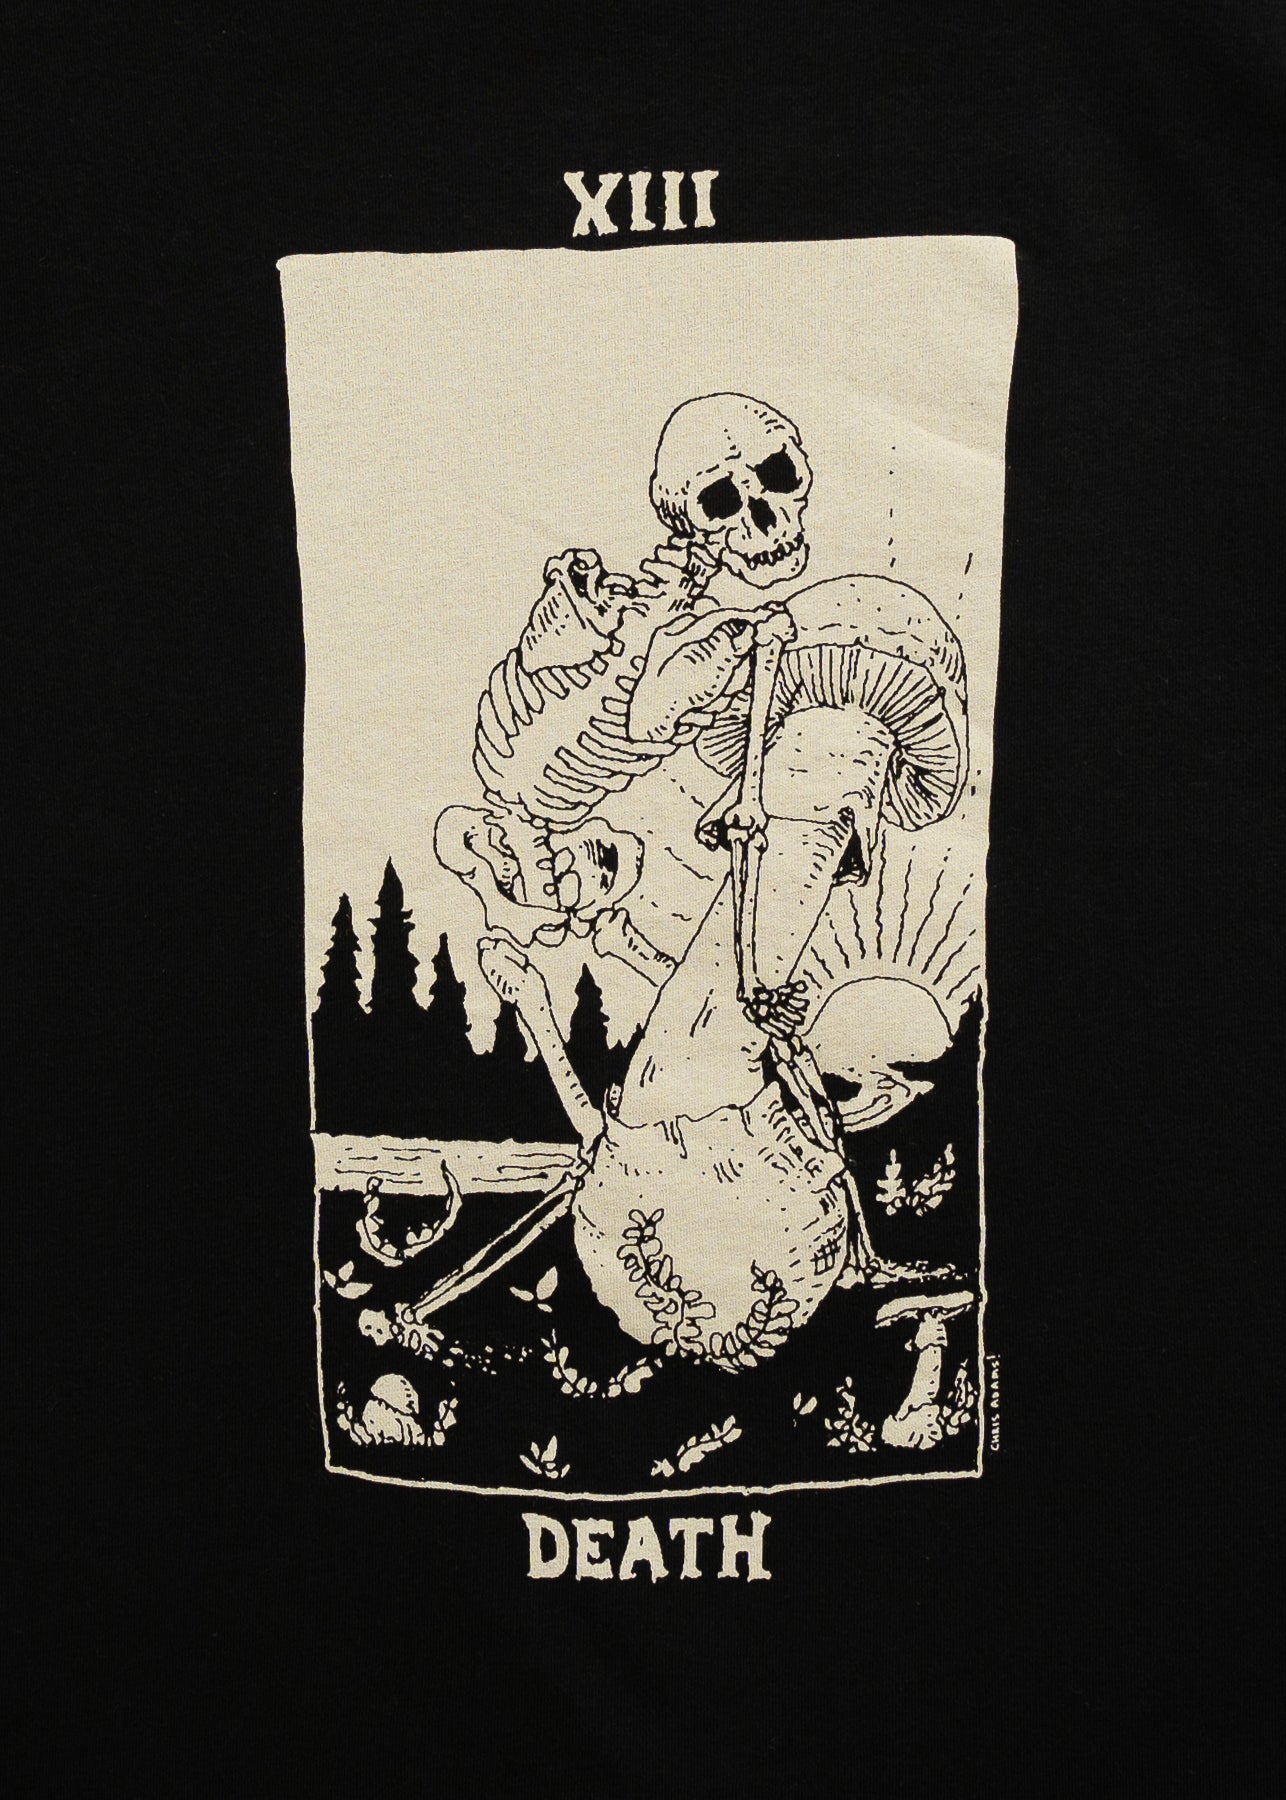 Mushroom Tarot Death Card Shirt, Black Cotton US Made